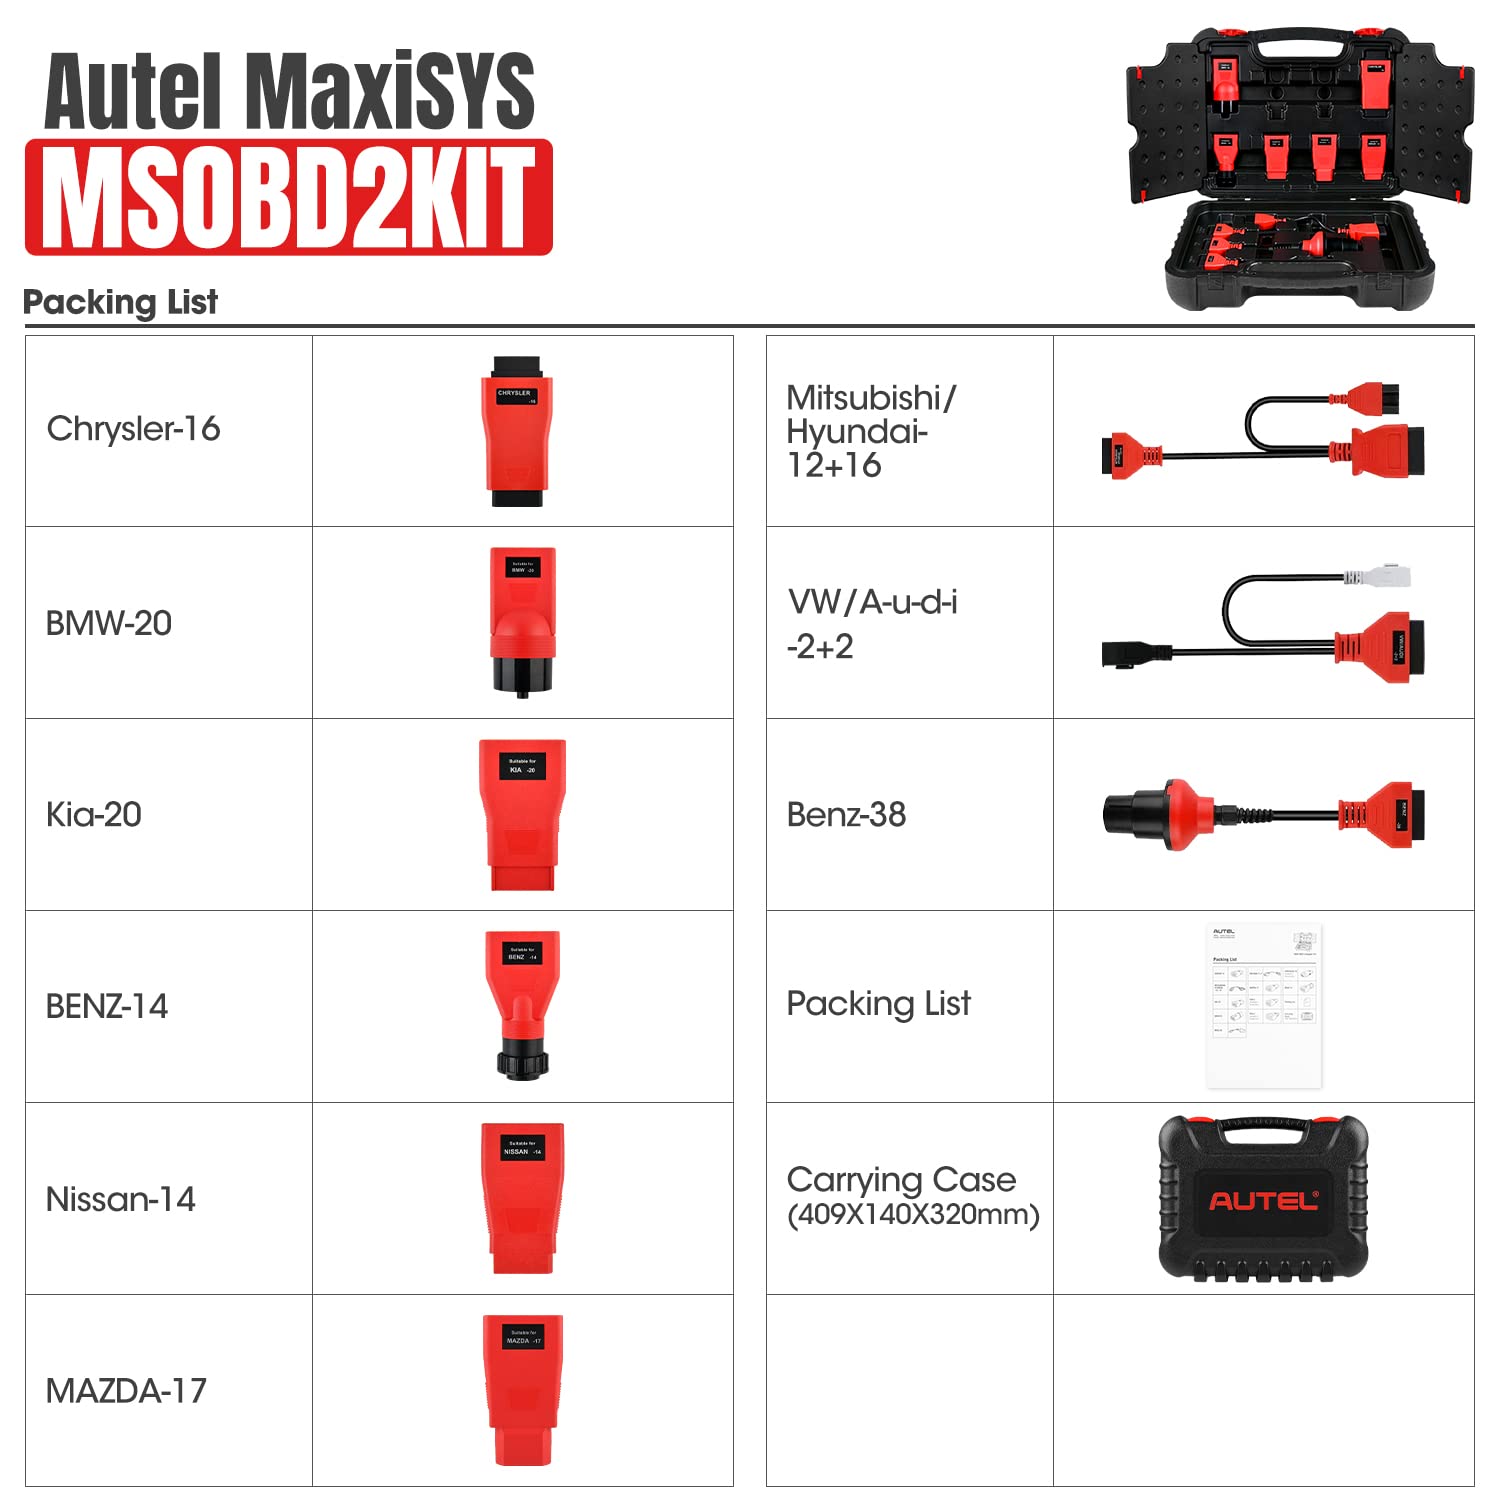 Autel MaxiSYS MSOBD2KIT 비 OBDII 어댑터 키트 포함: Nissan-14, Mitsubishi/Hyundai 12+16, Kia-20, BMW-20, Benz-38, VW/Audi-2+2, Mazda-17, Chrysler-16 및 Benz -14 9 커넥터